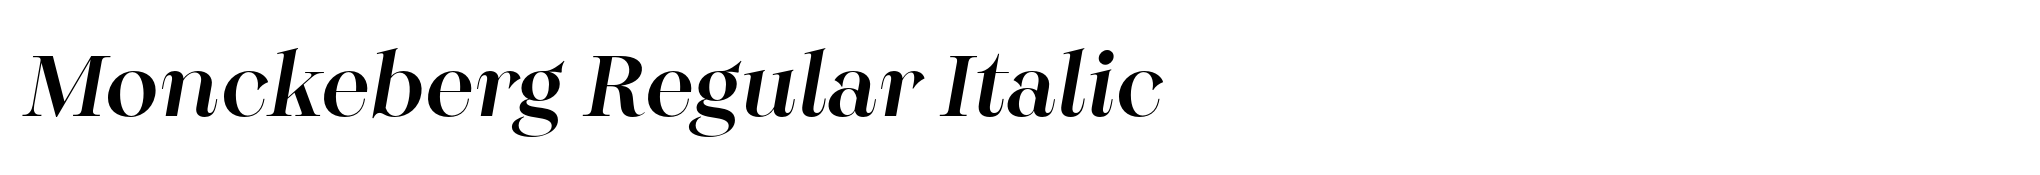 Monckeberg Regular Italic image